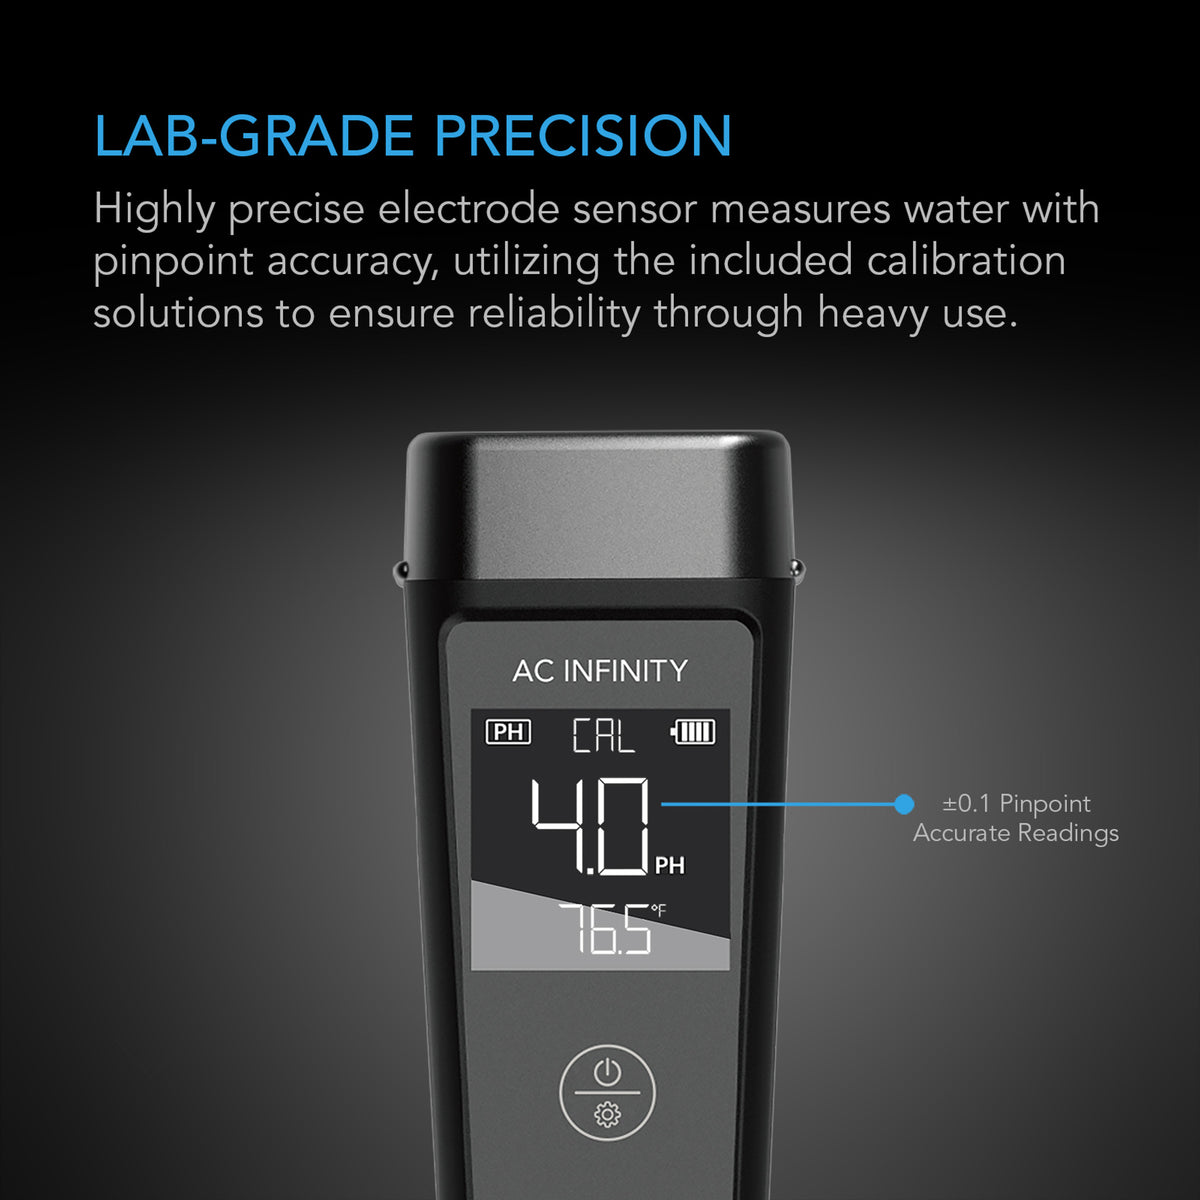 Lab Grade Precision equipment